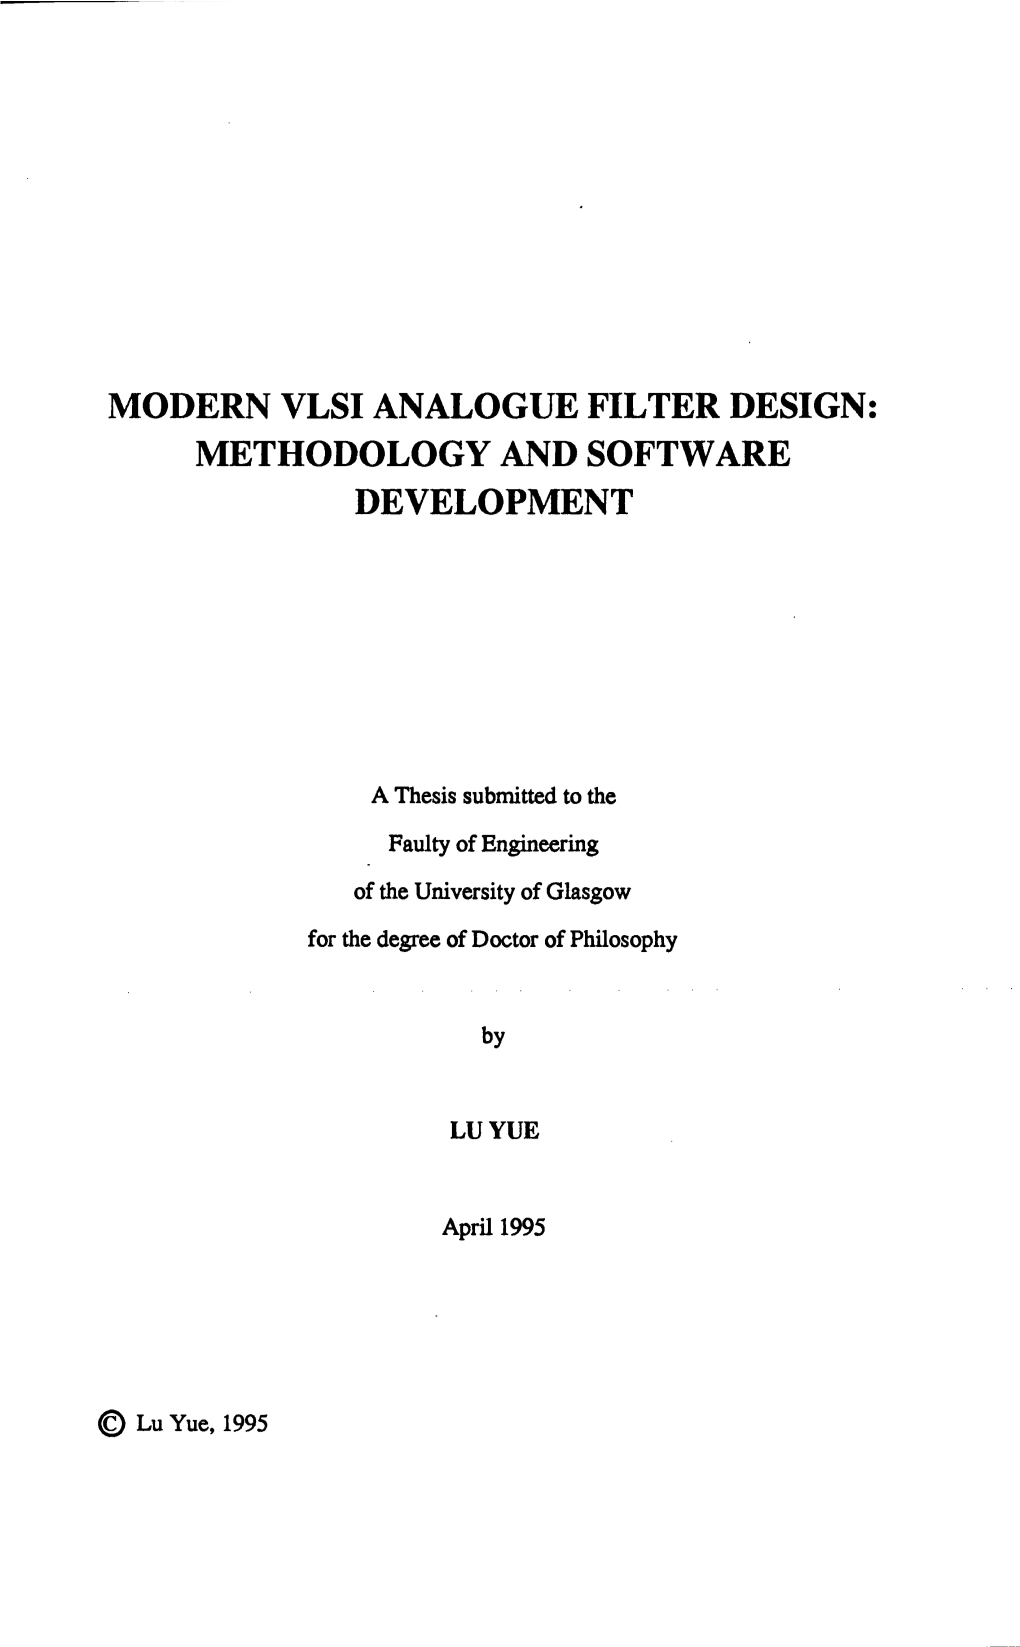 Modern Vlsi Analogue Filter Design: Methodology and Software Development